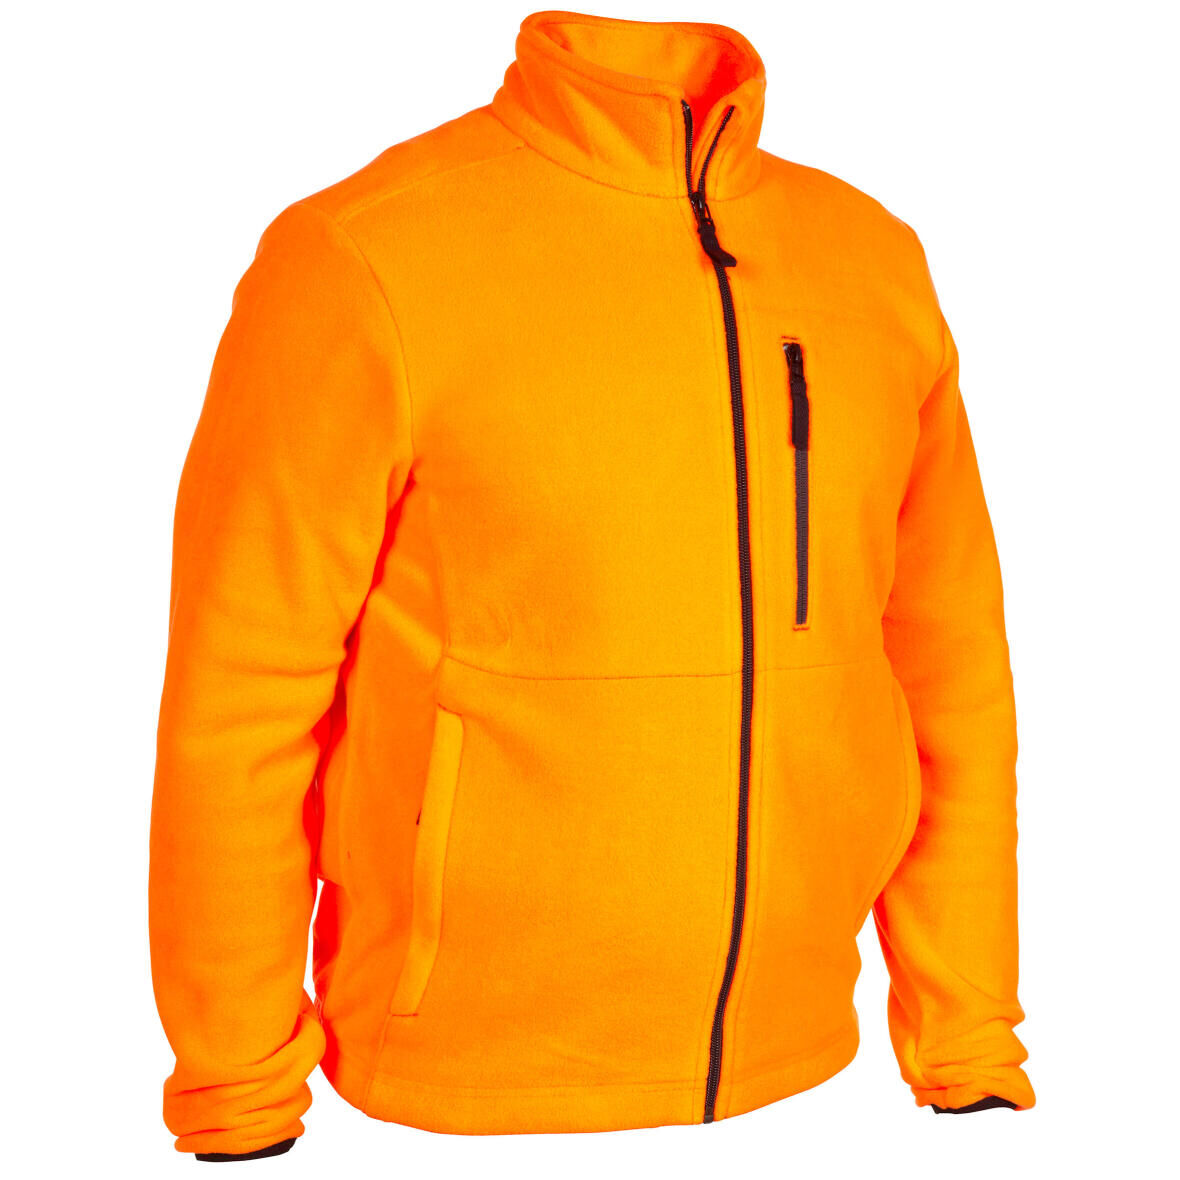 Warmes Fleece in Neonfarbe, hohe Sichtbarkeit, als PSA zertifiziert.